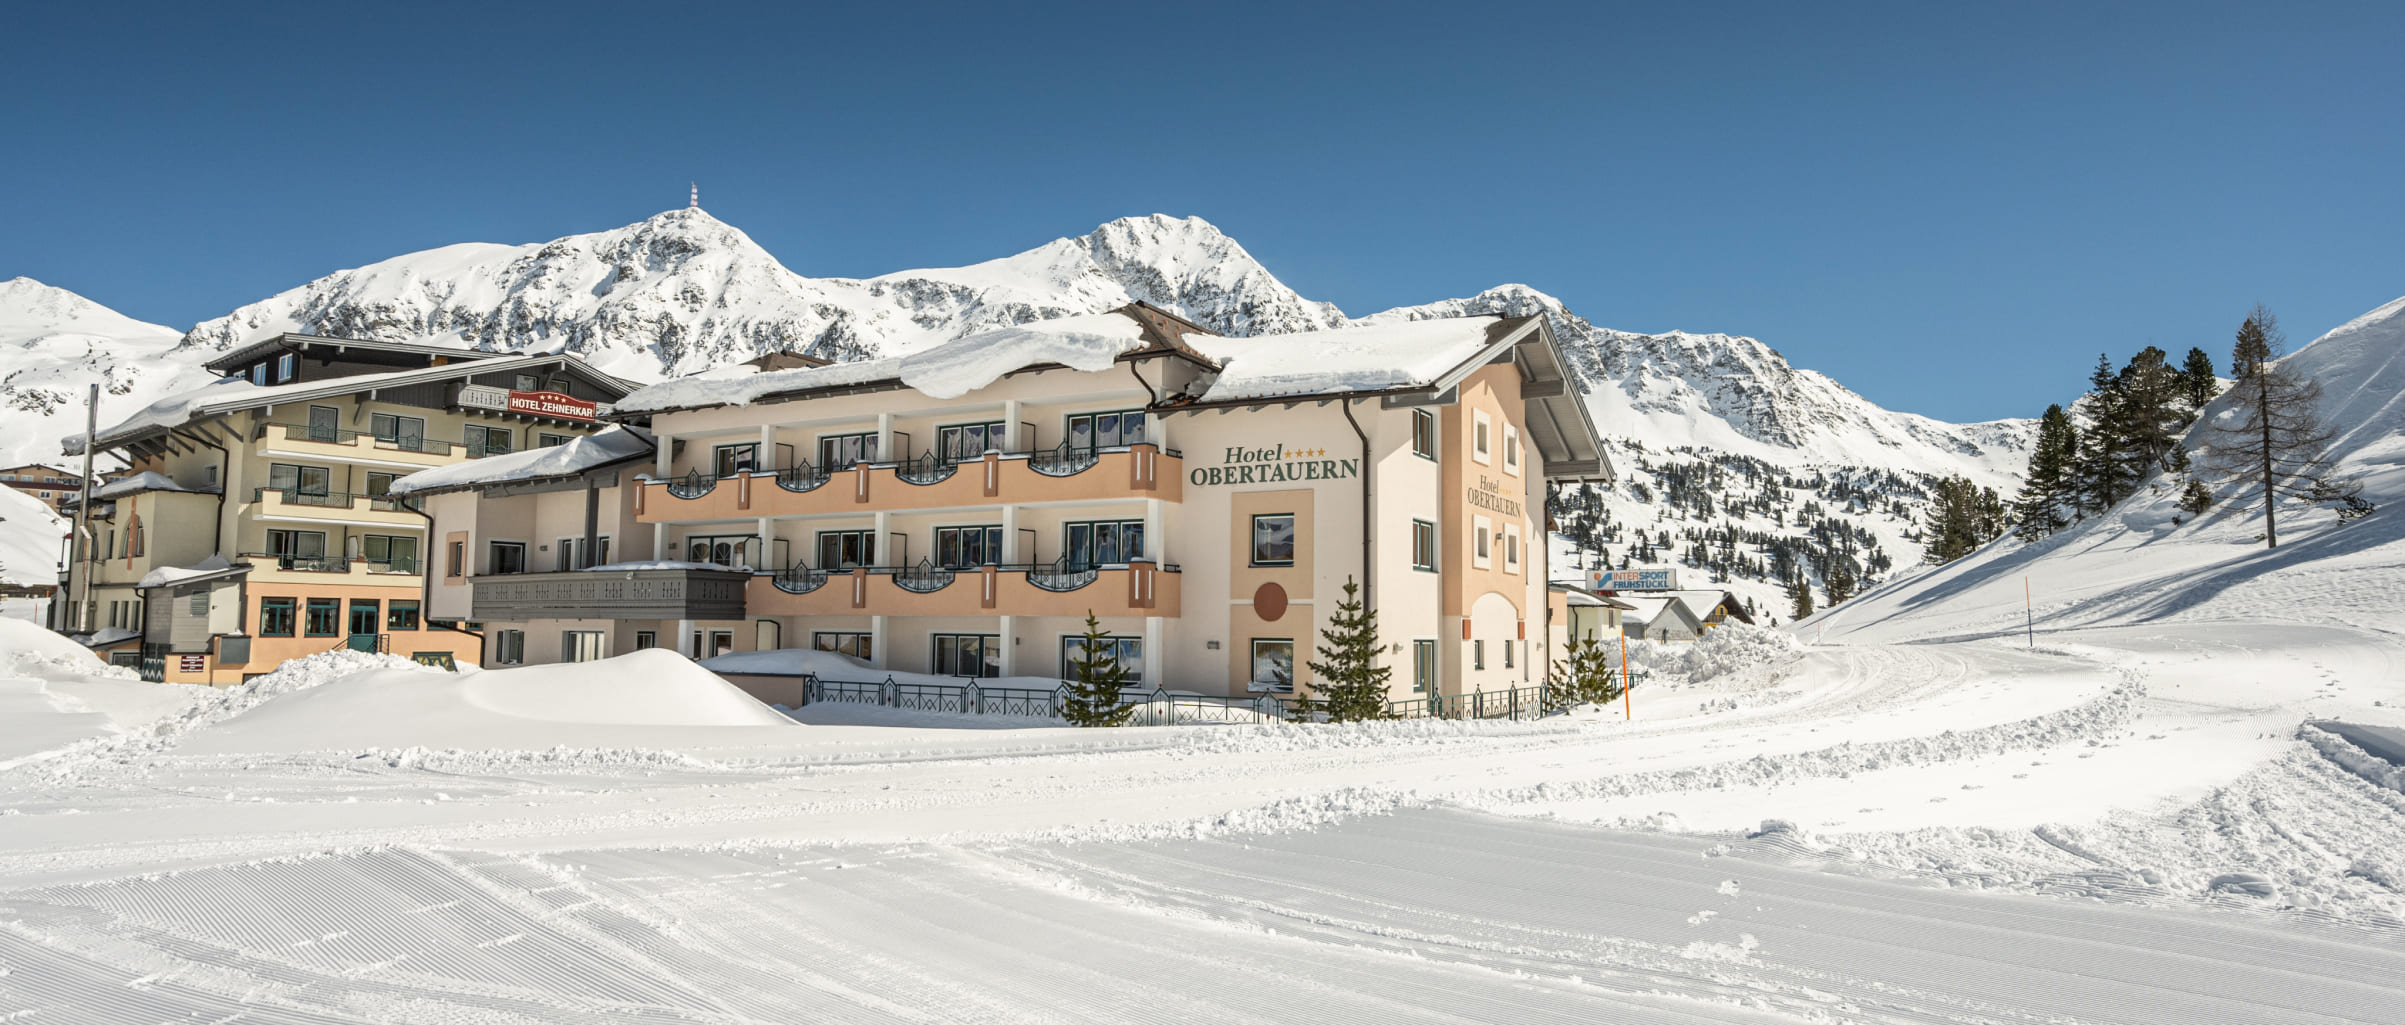 Ski Hotel Zehnerkar and Obertauern right on the ski slope